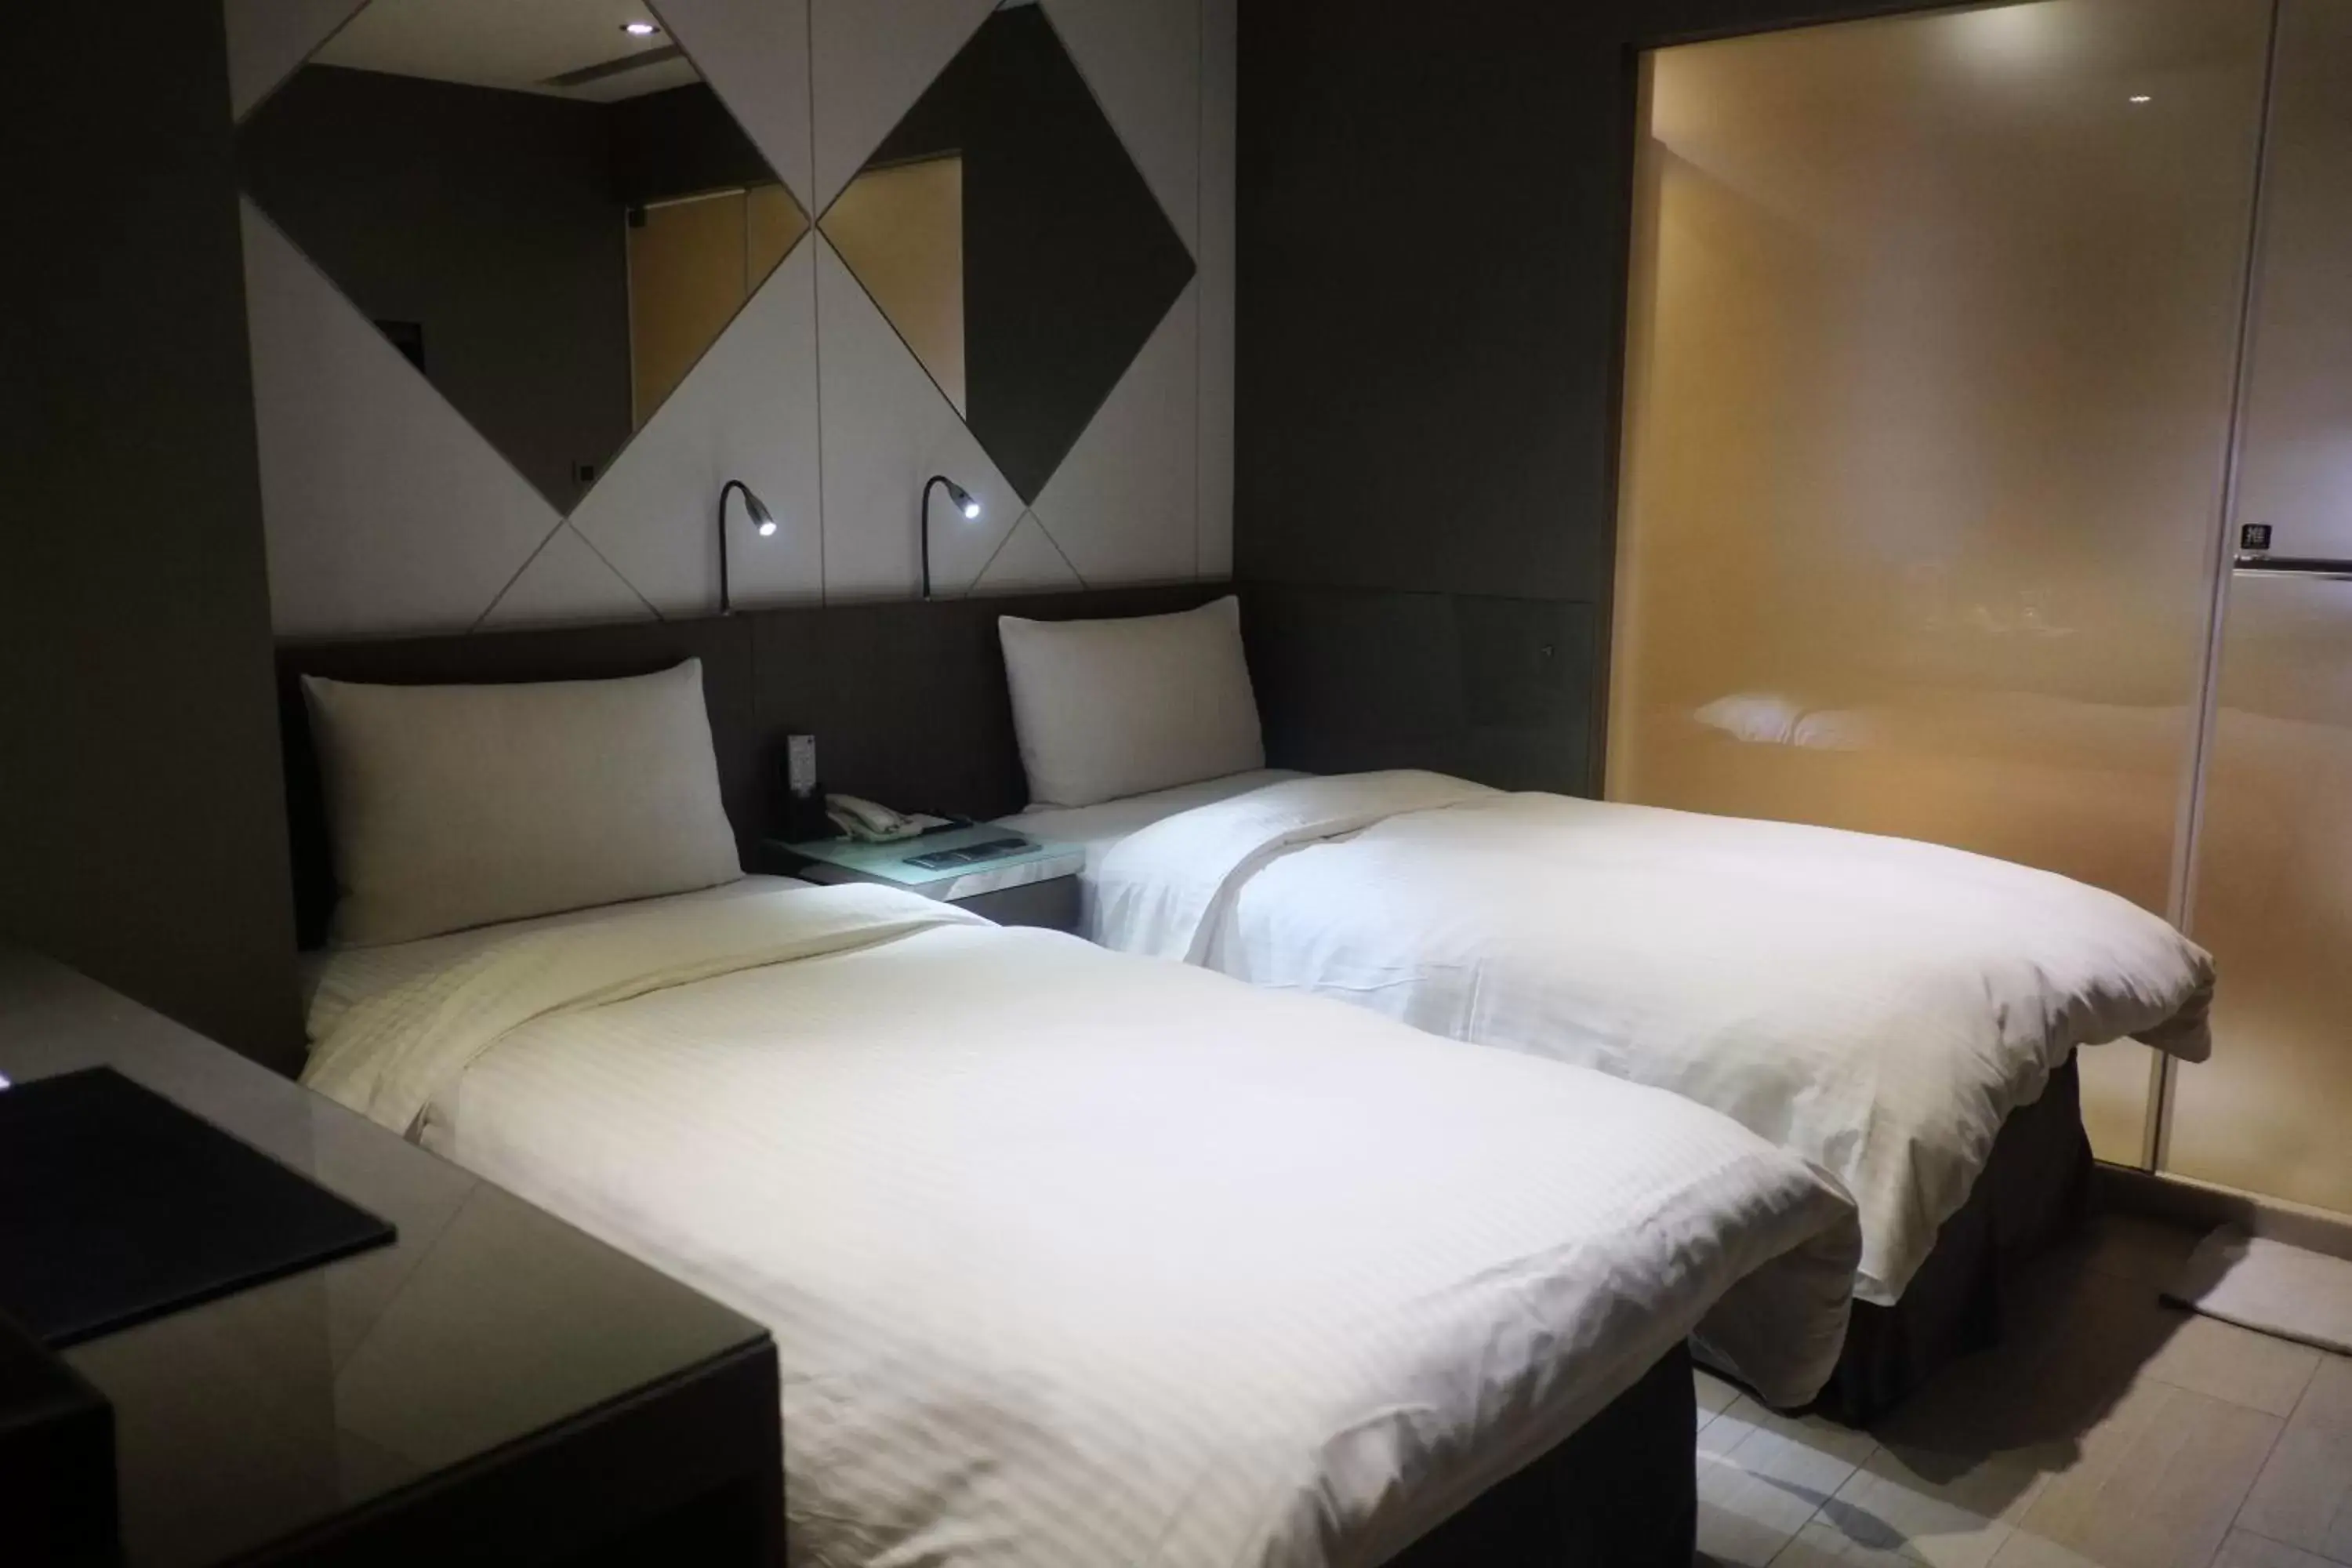 Bed in Beauty Hotels Taipei - Hotel B6